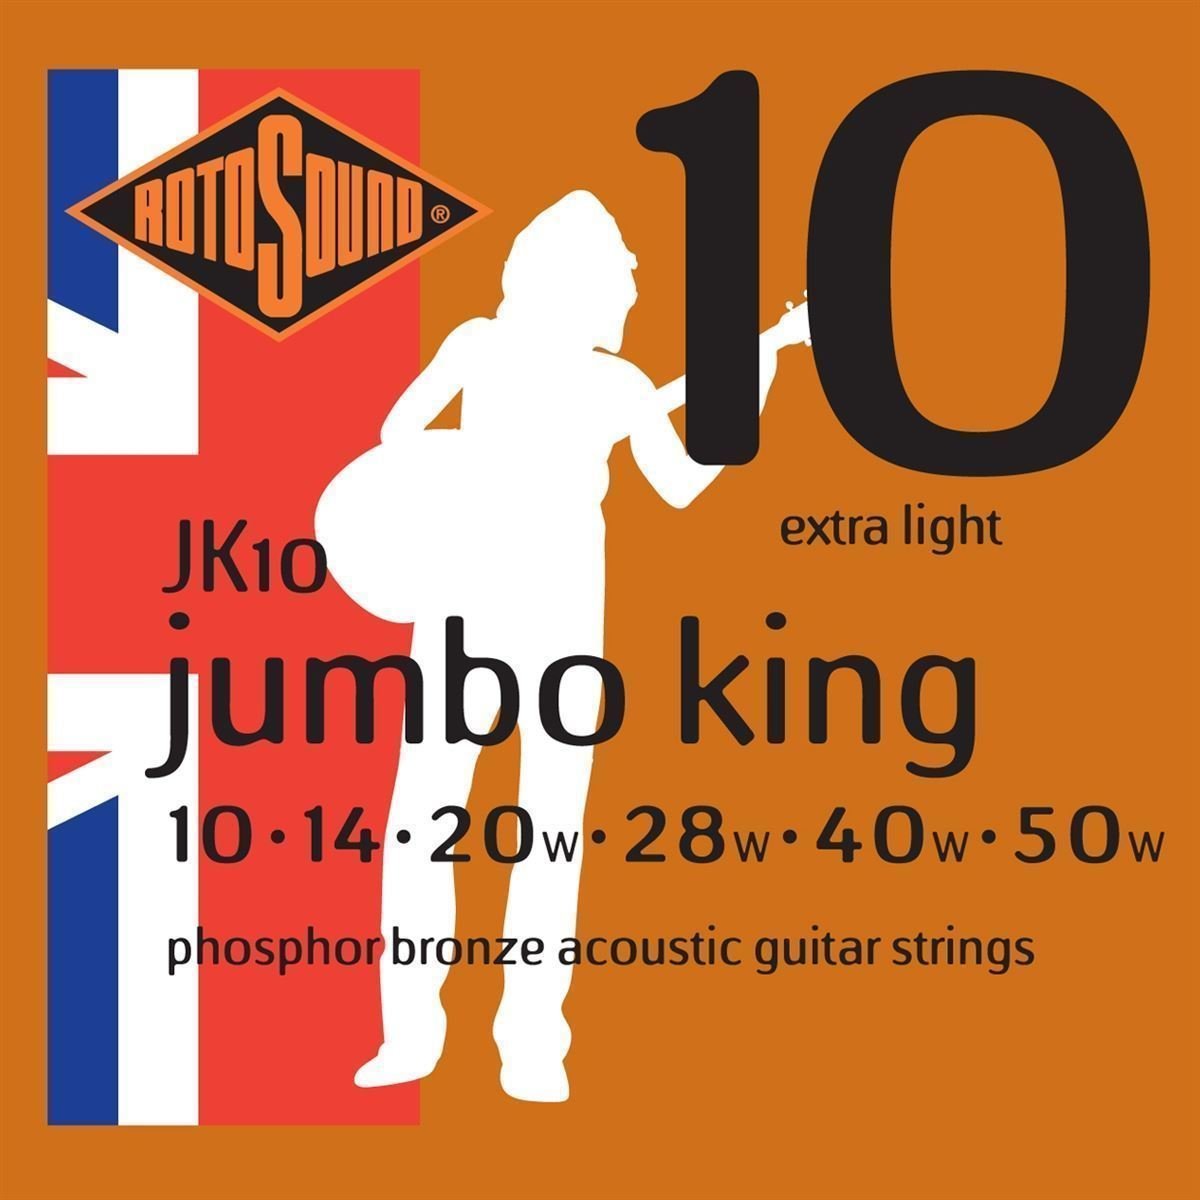 Guitar strings Rotosound JK10